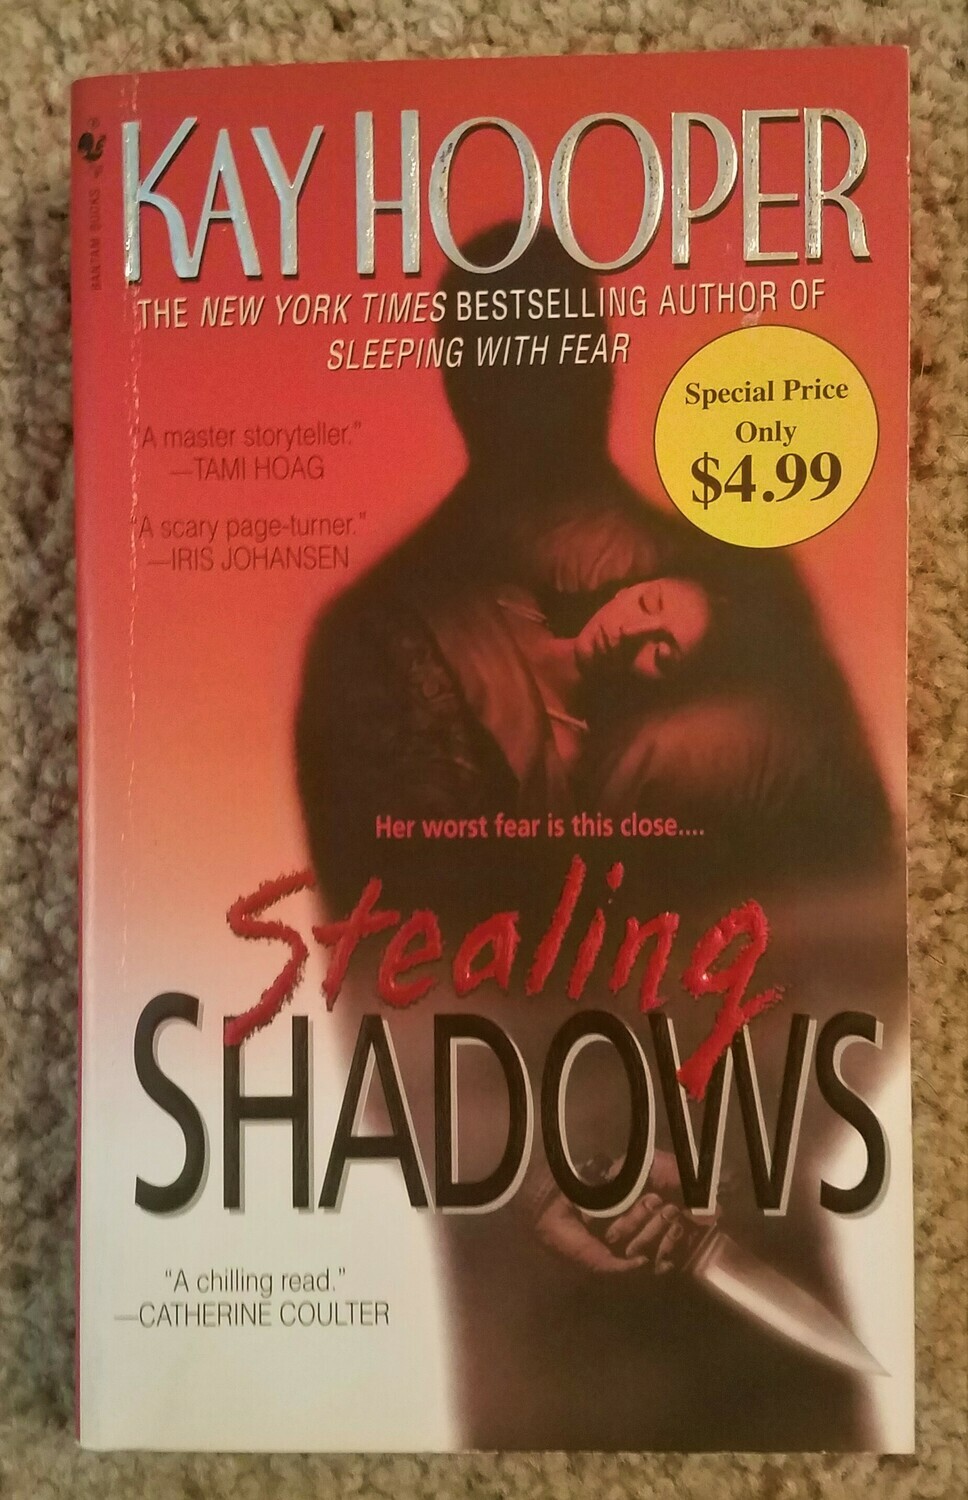 Stealing Shadows by Kay Hooper